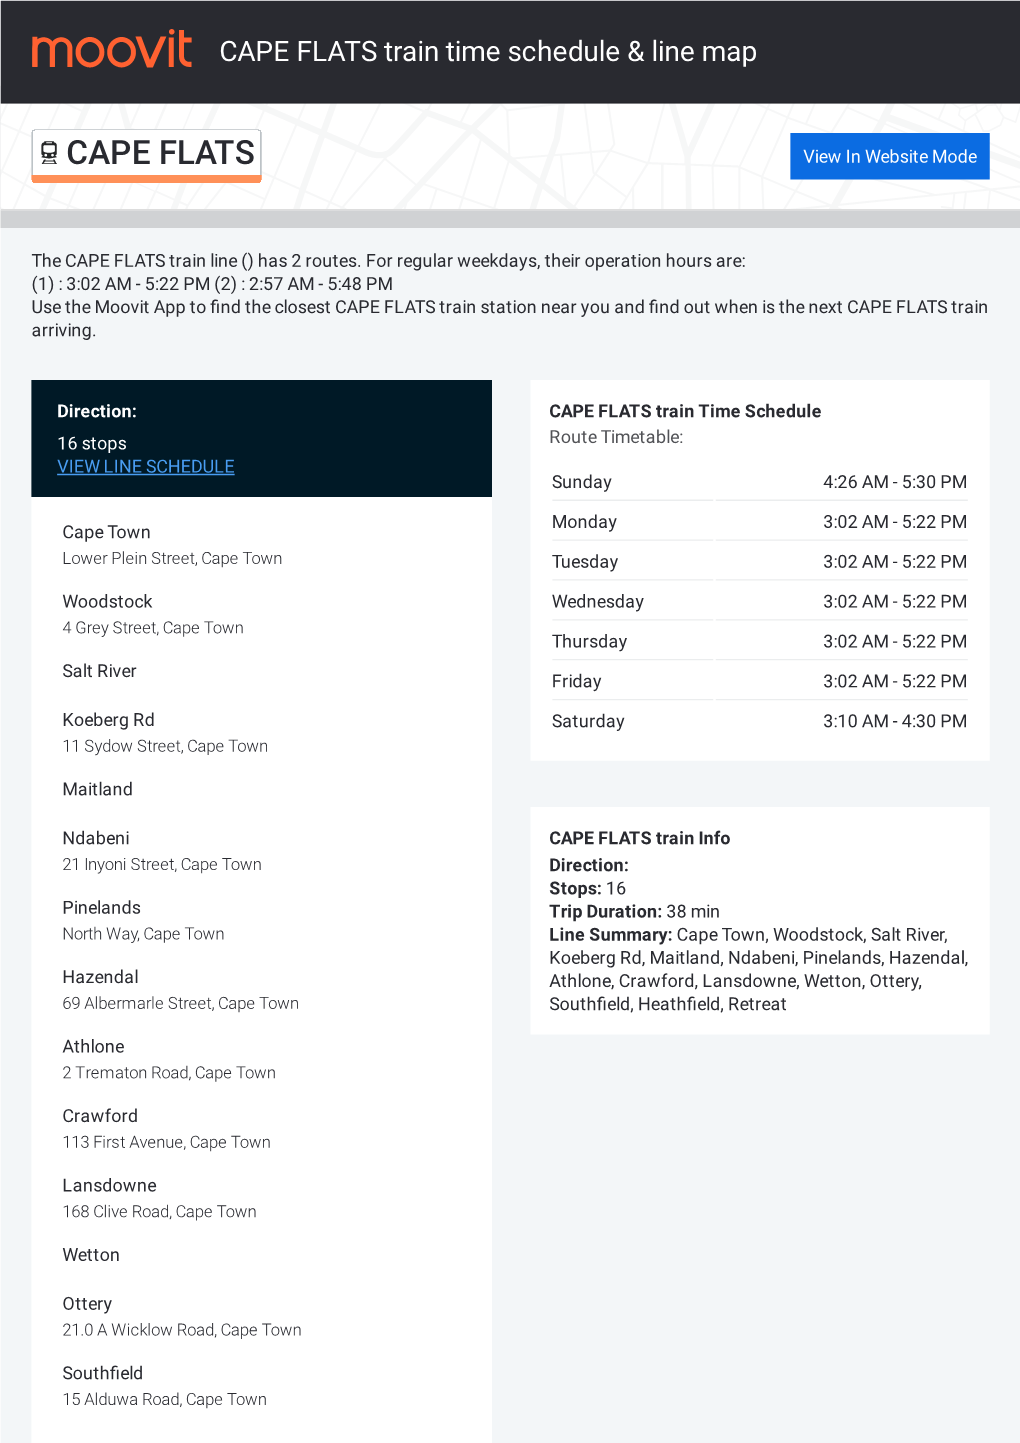 CAPE FLATS Train Time Schedule & Line Route